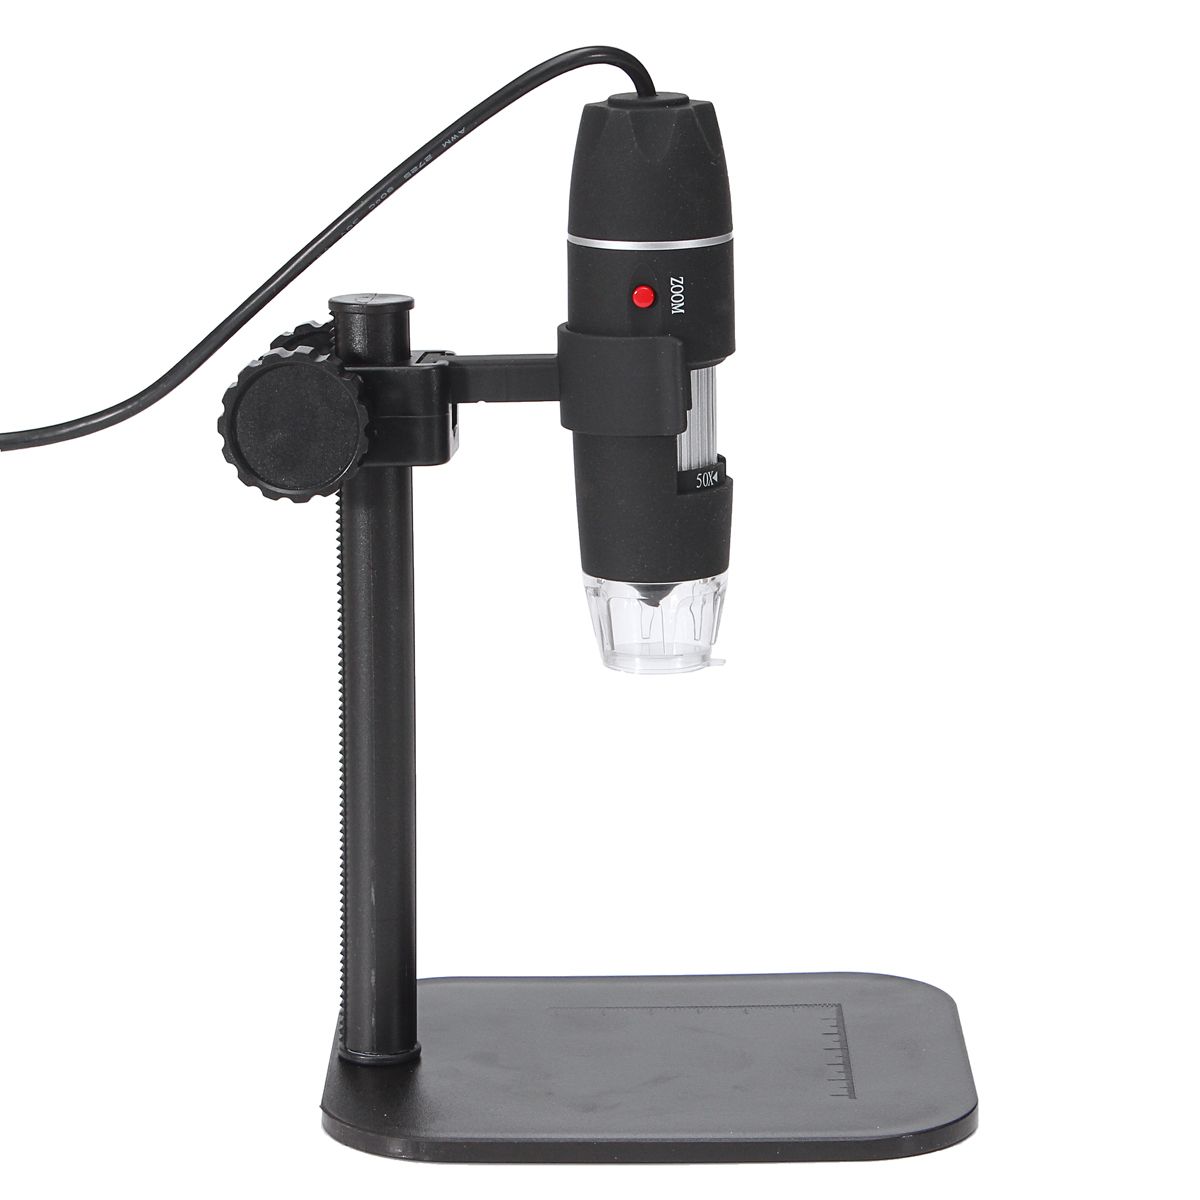 5MP-8-LED-USB-Digital-Camera-Microscope-Magnifier-Lift-Stand-1X-500X-5V-DC-Video-1154690